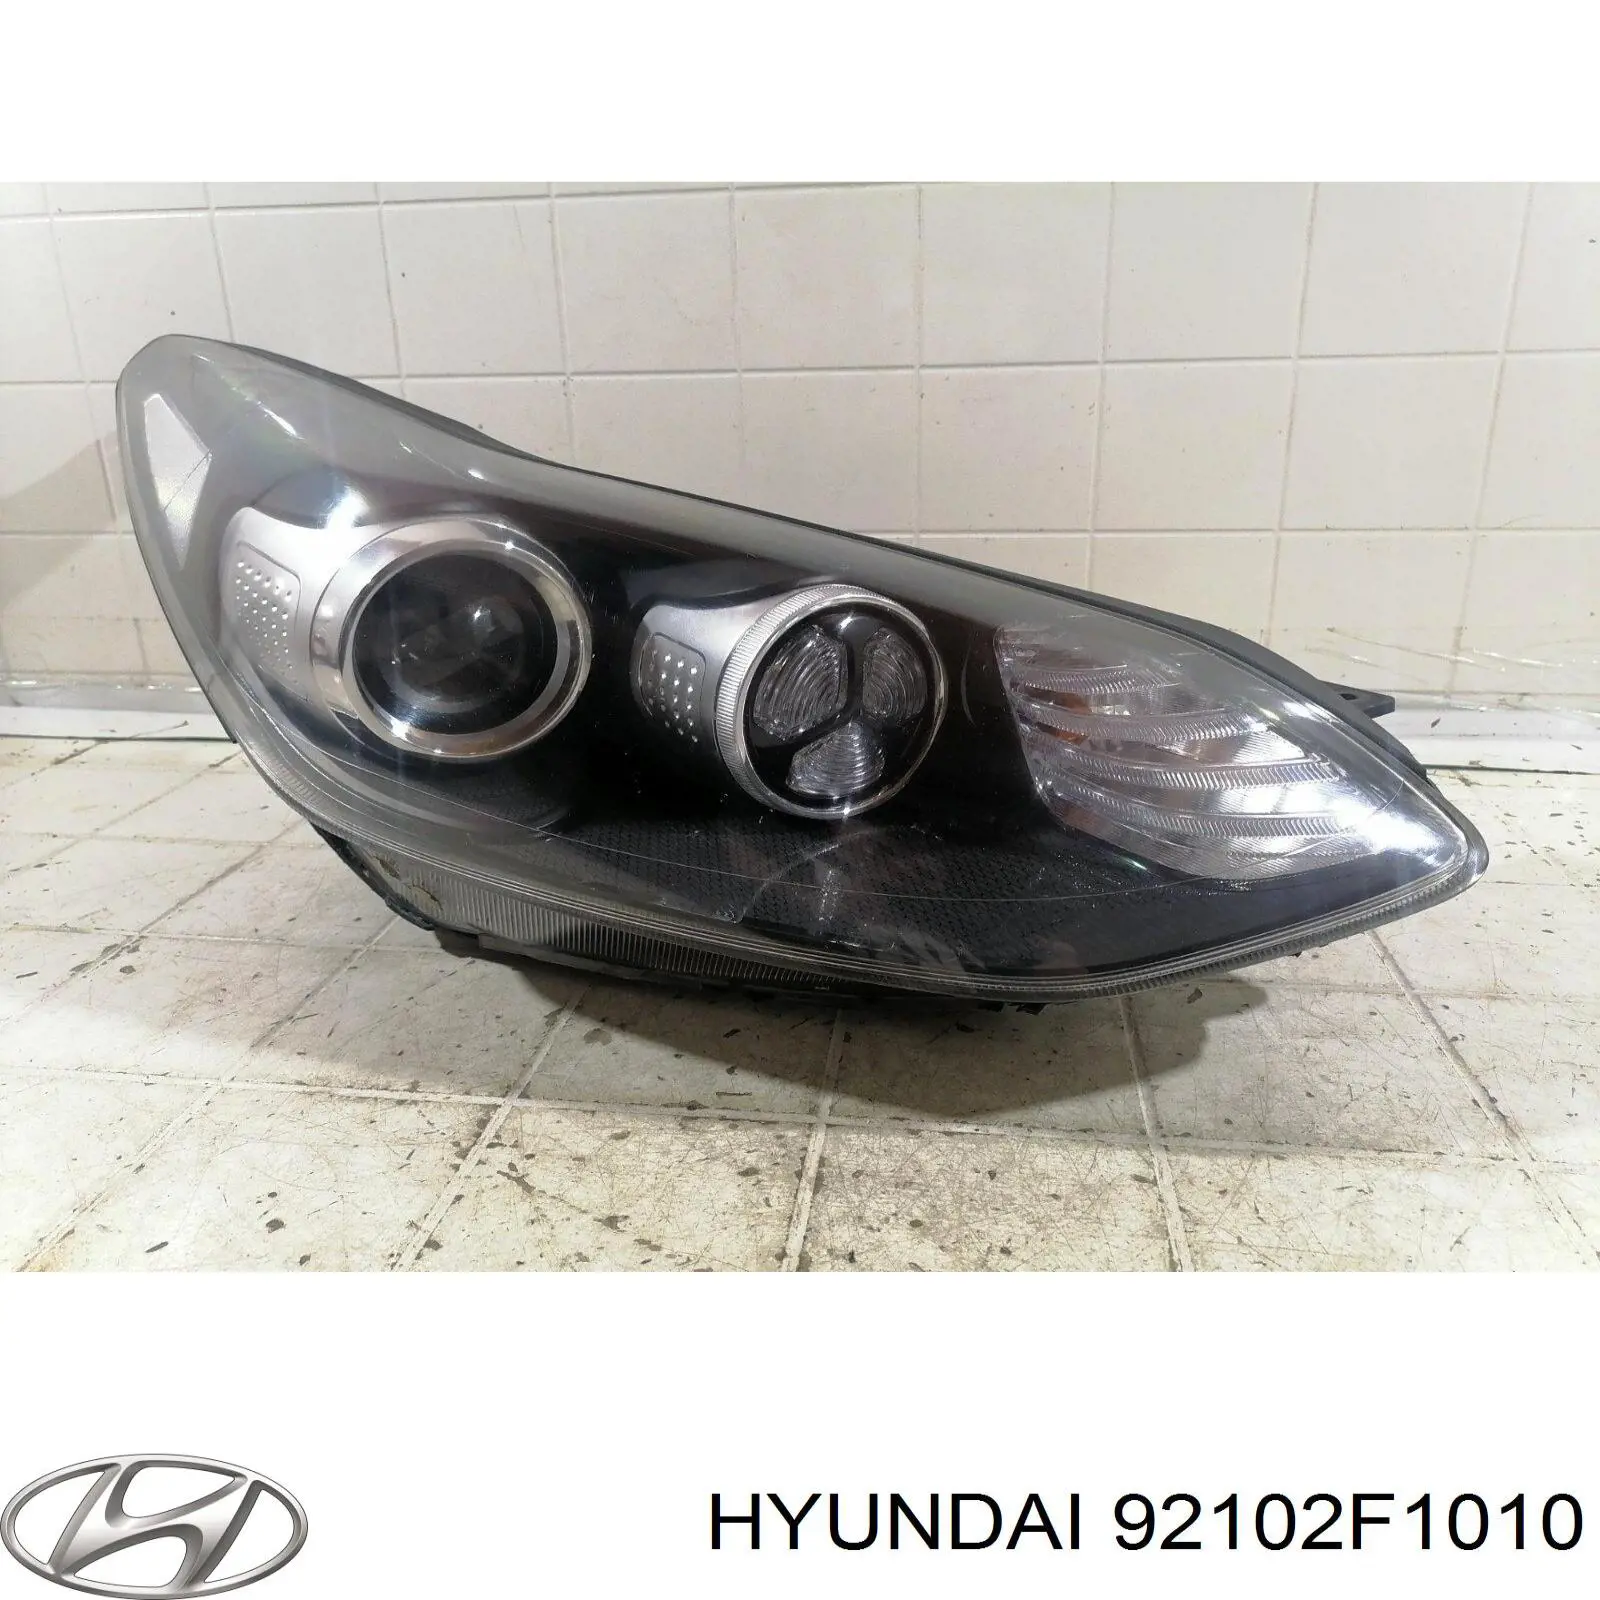 92102F1010 Hyundai/Kia faro derecho